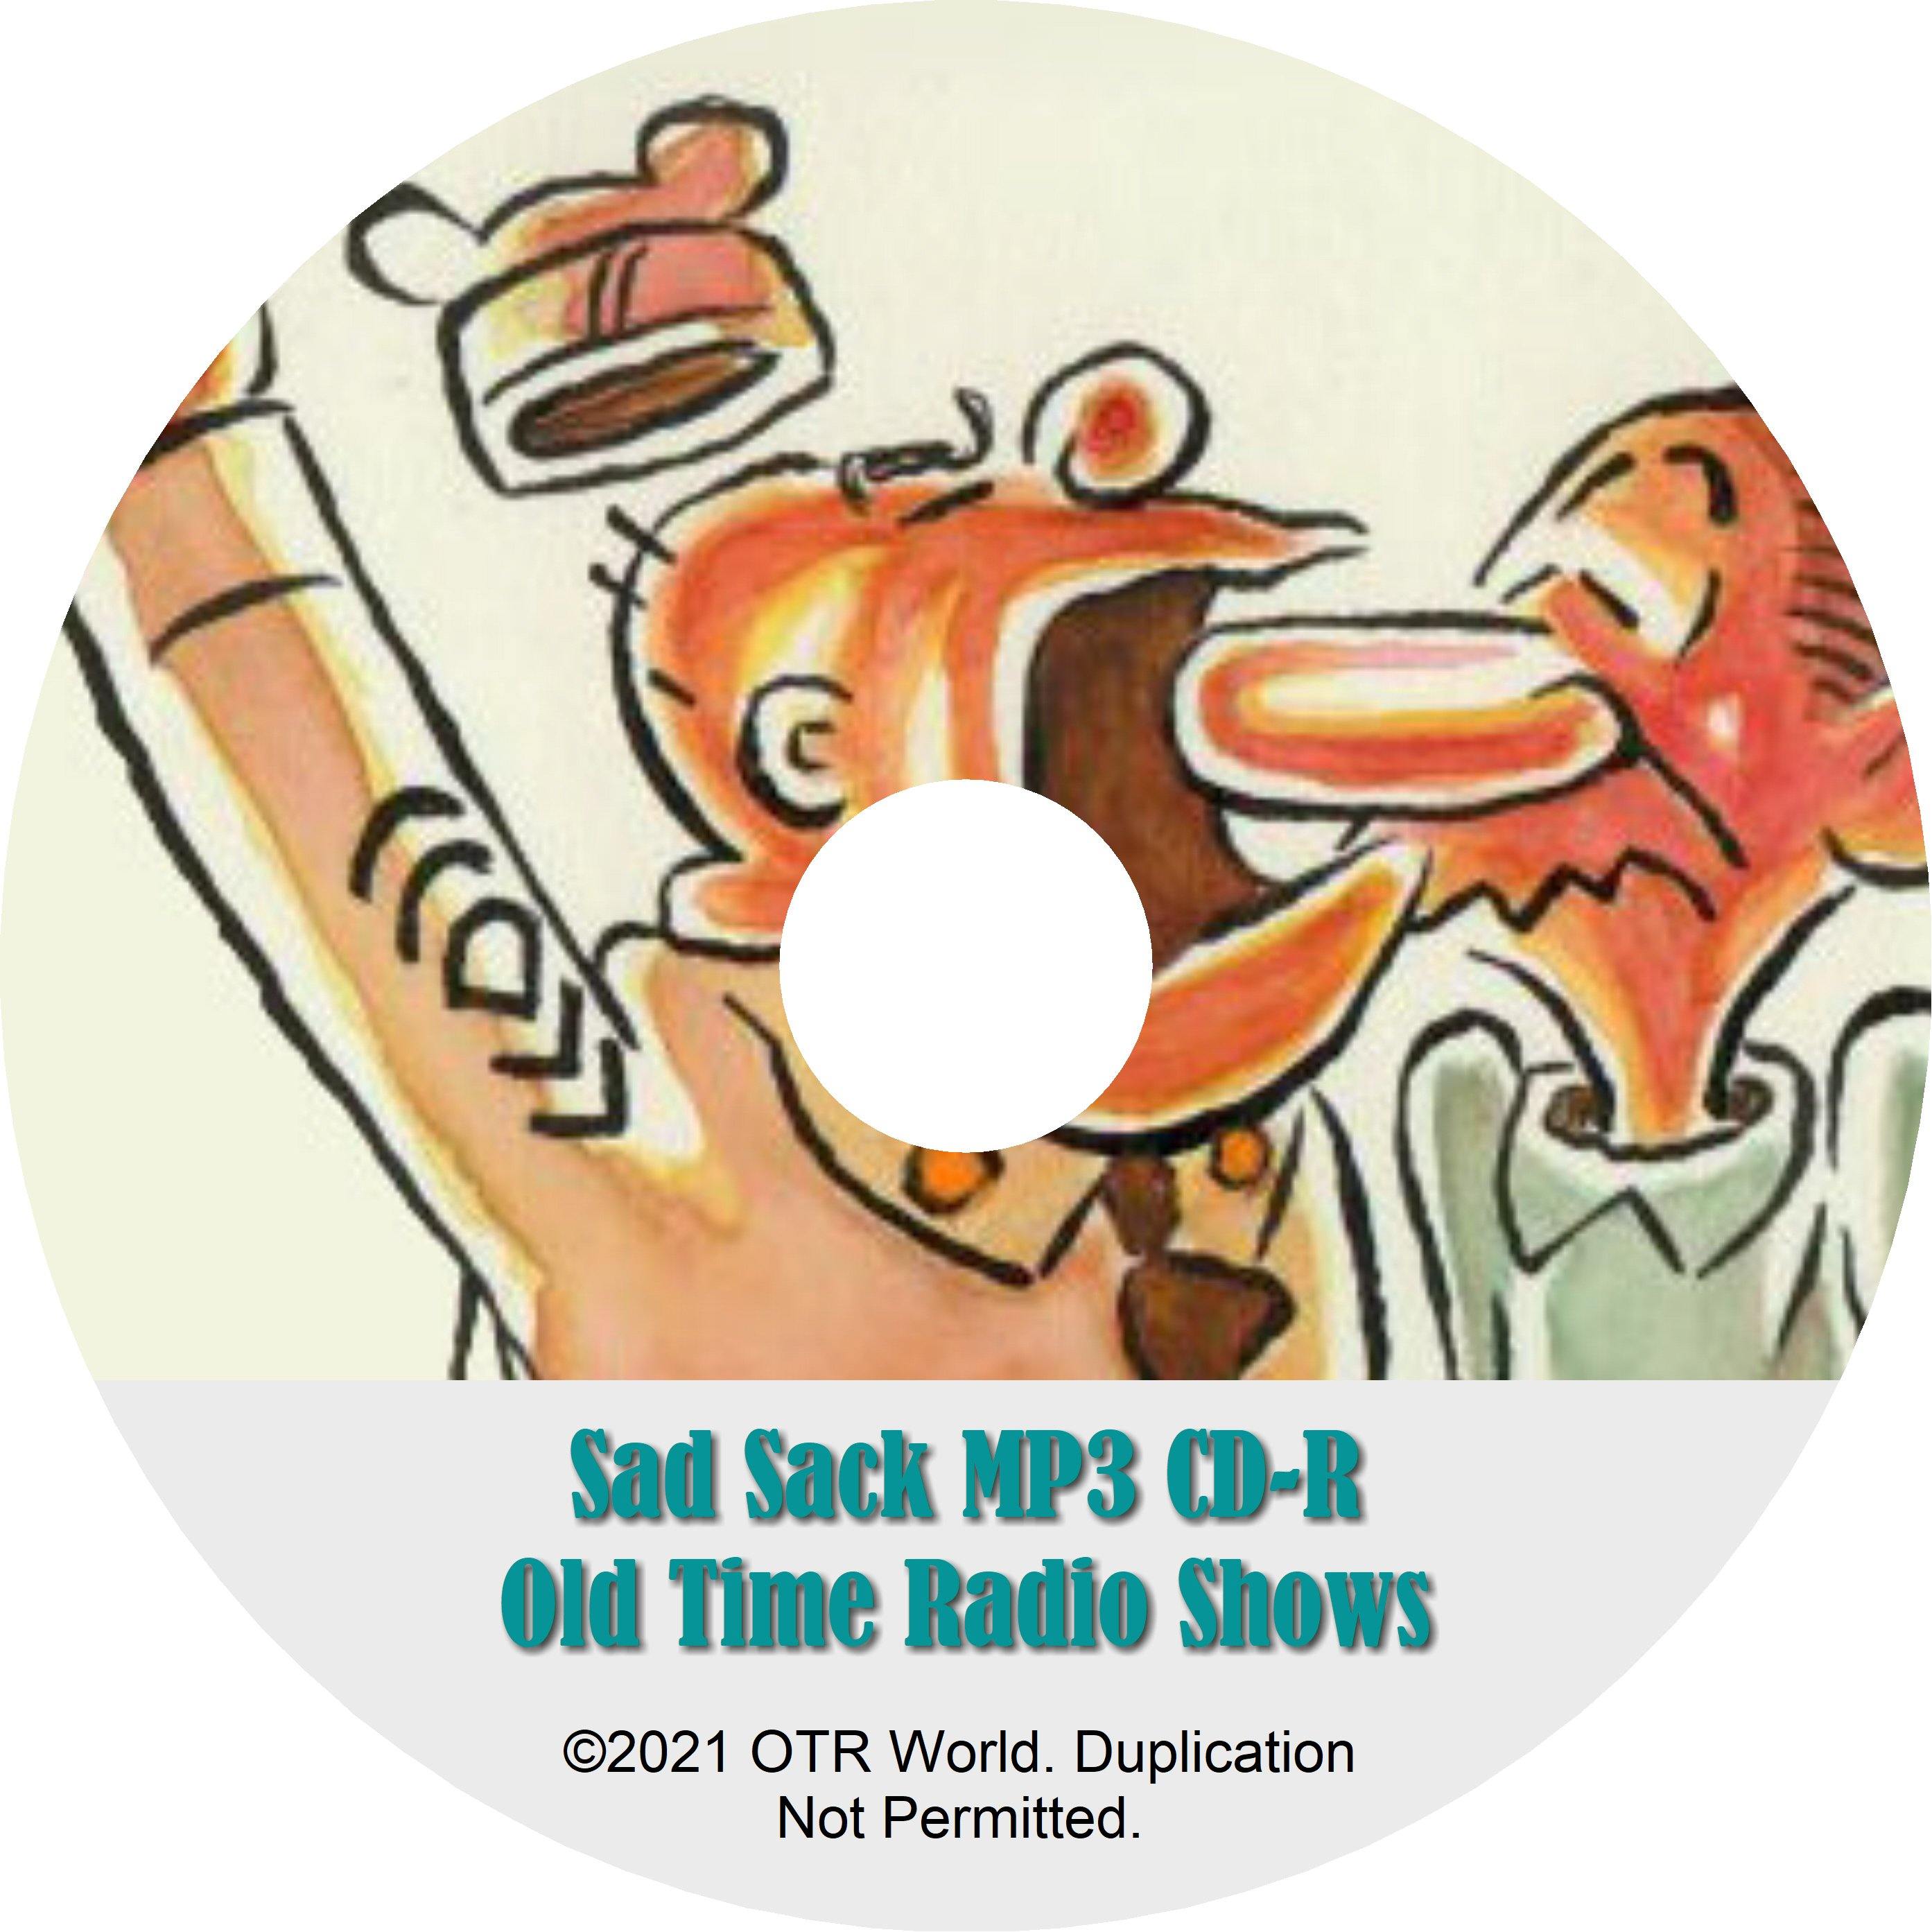 Sad Sack OTR OTRS Old Time Radio Shows MP3 On CD-R 4 Episodes - OTR World